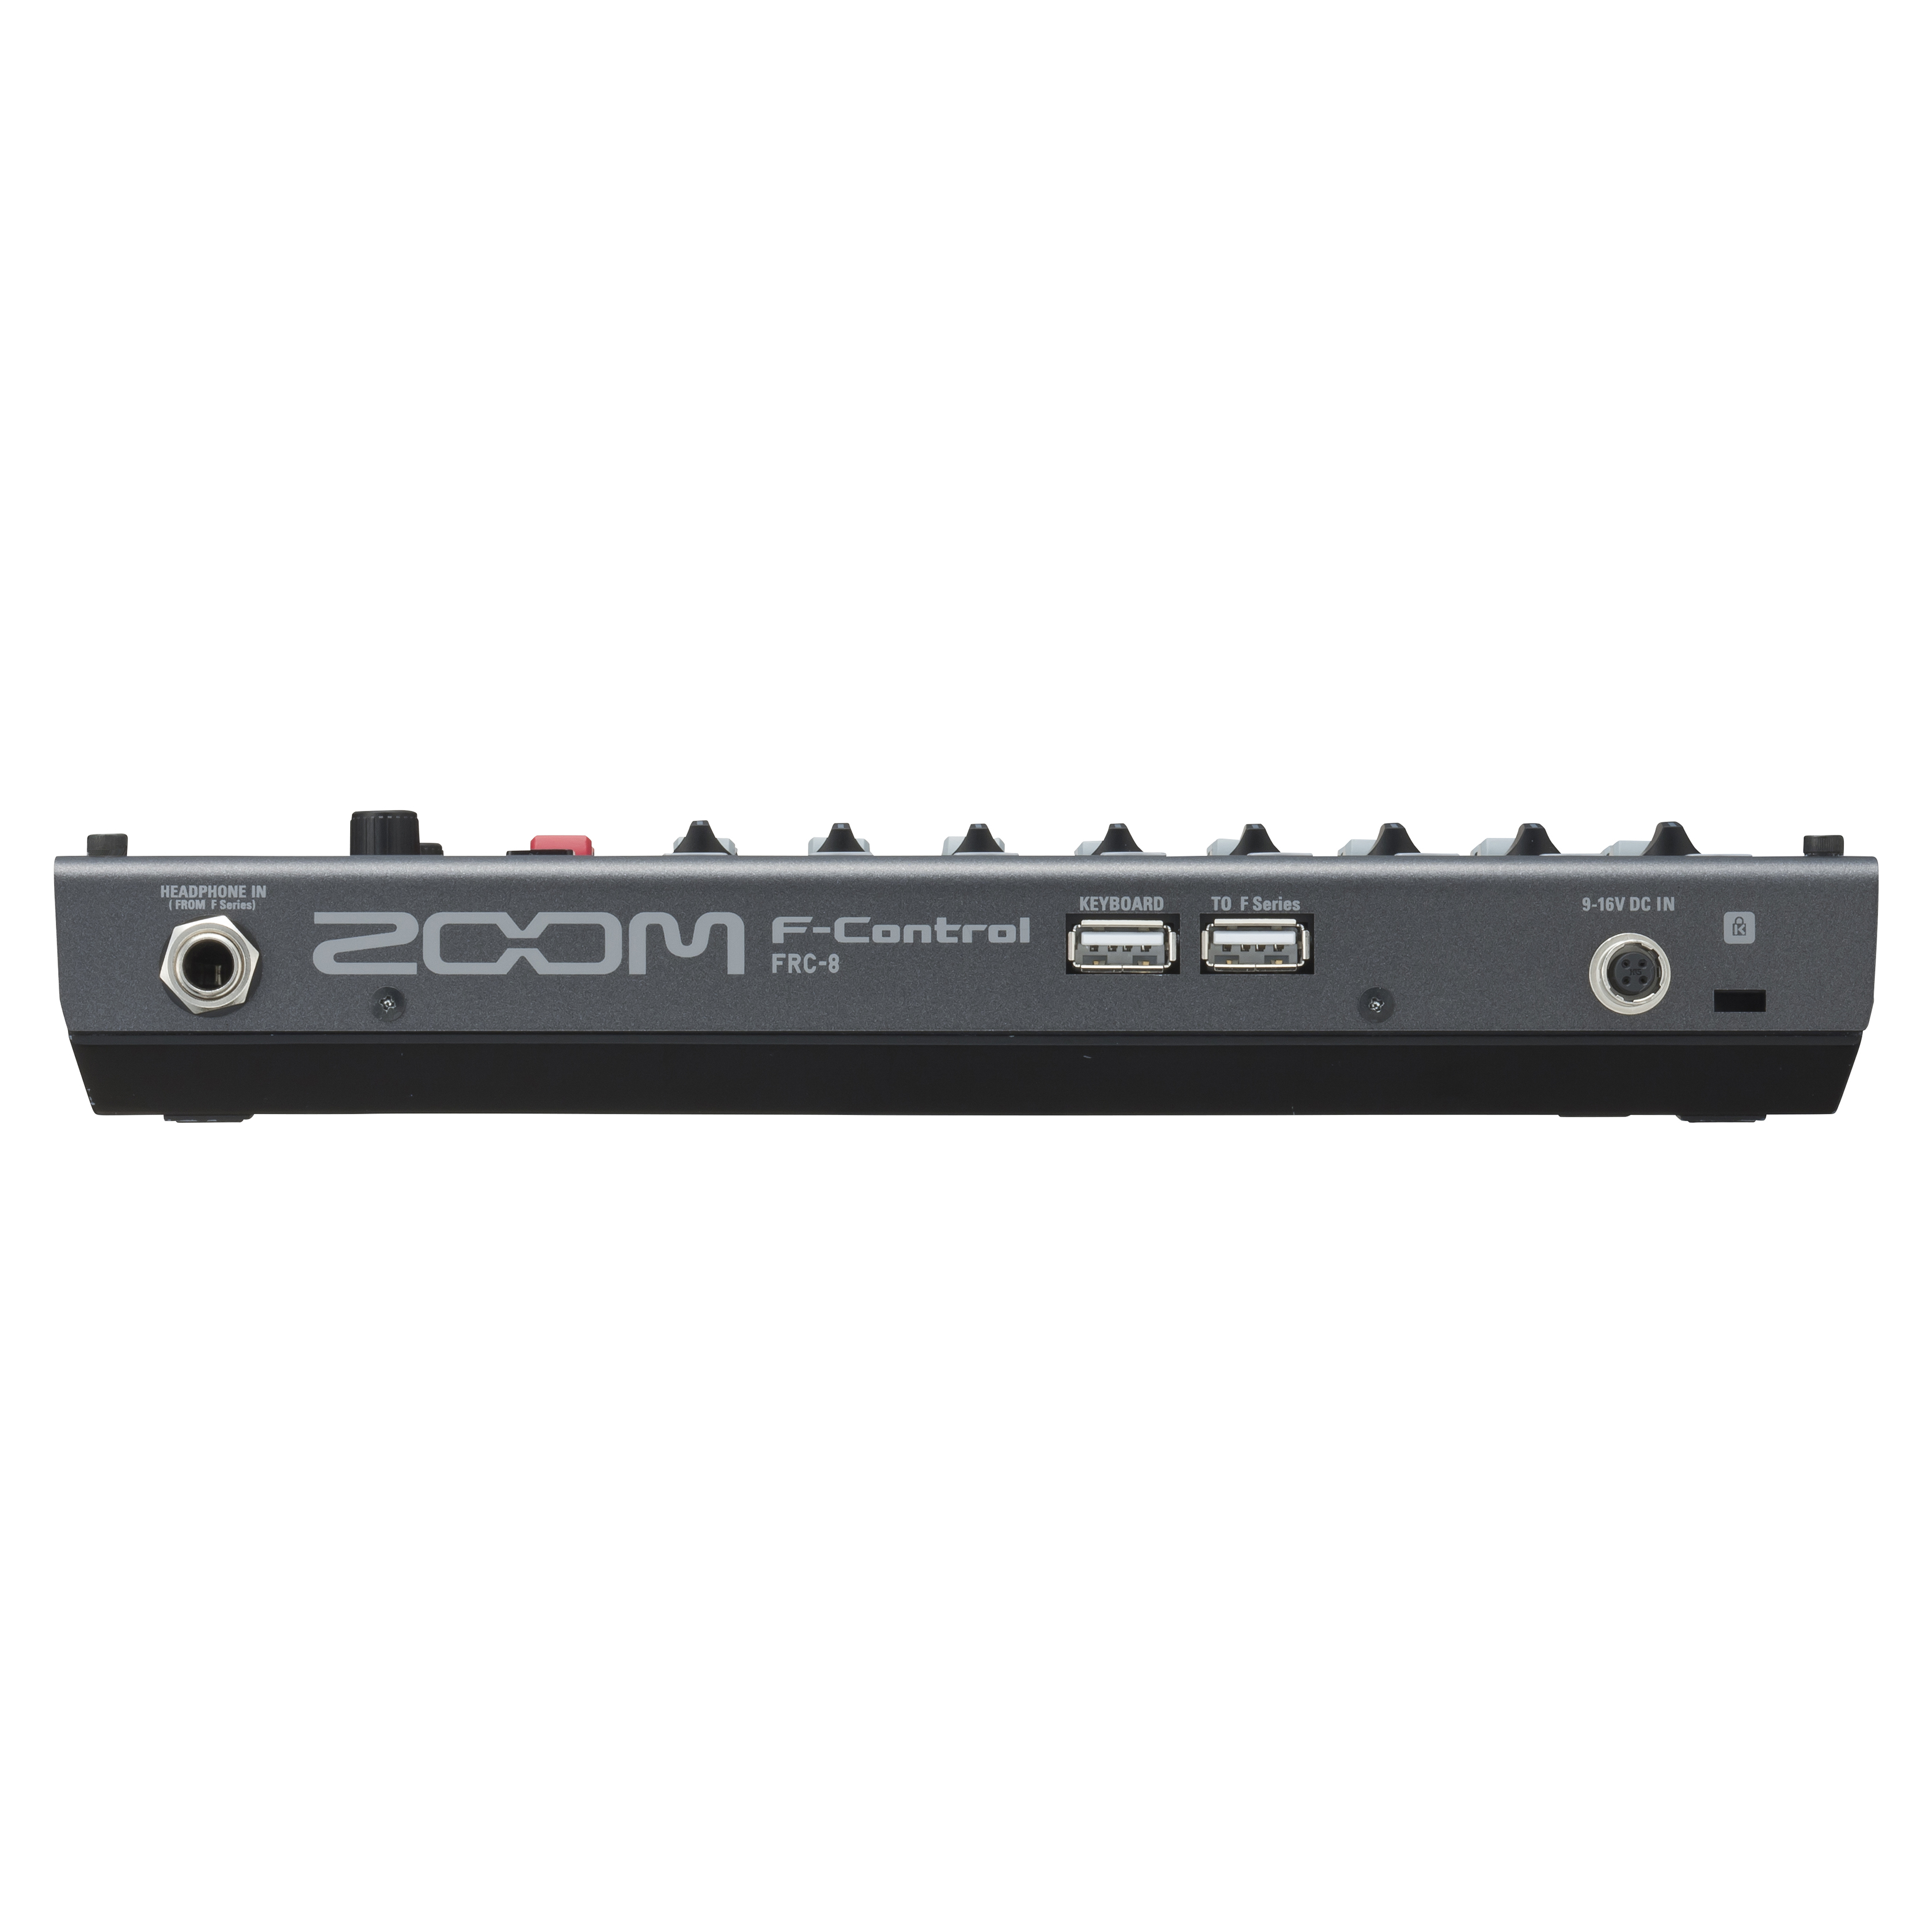 Zoom F-control Frc-8 - Multi tracks recorder - Variation 2